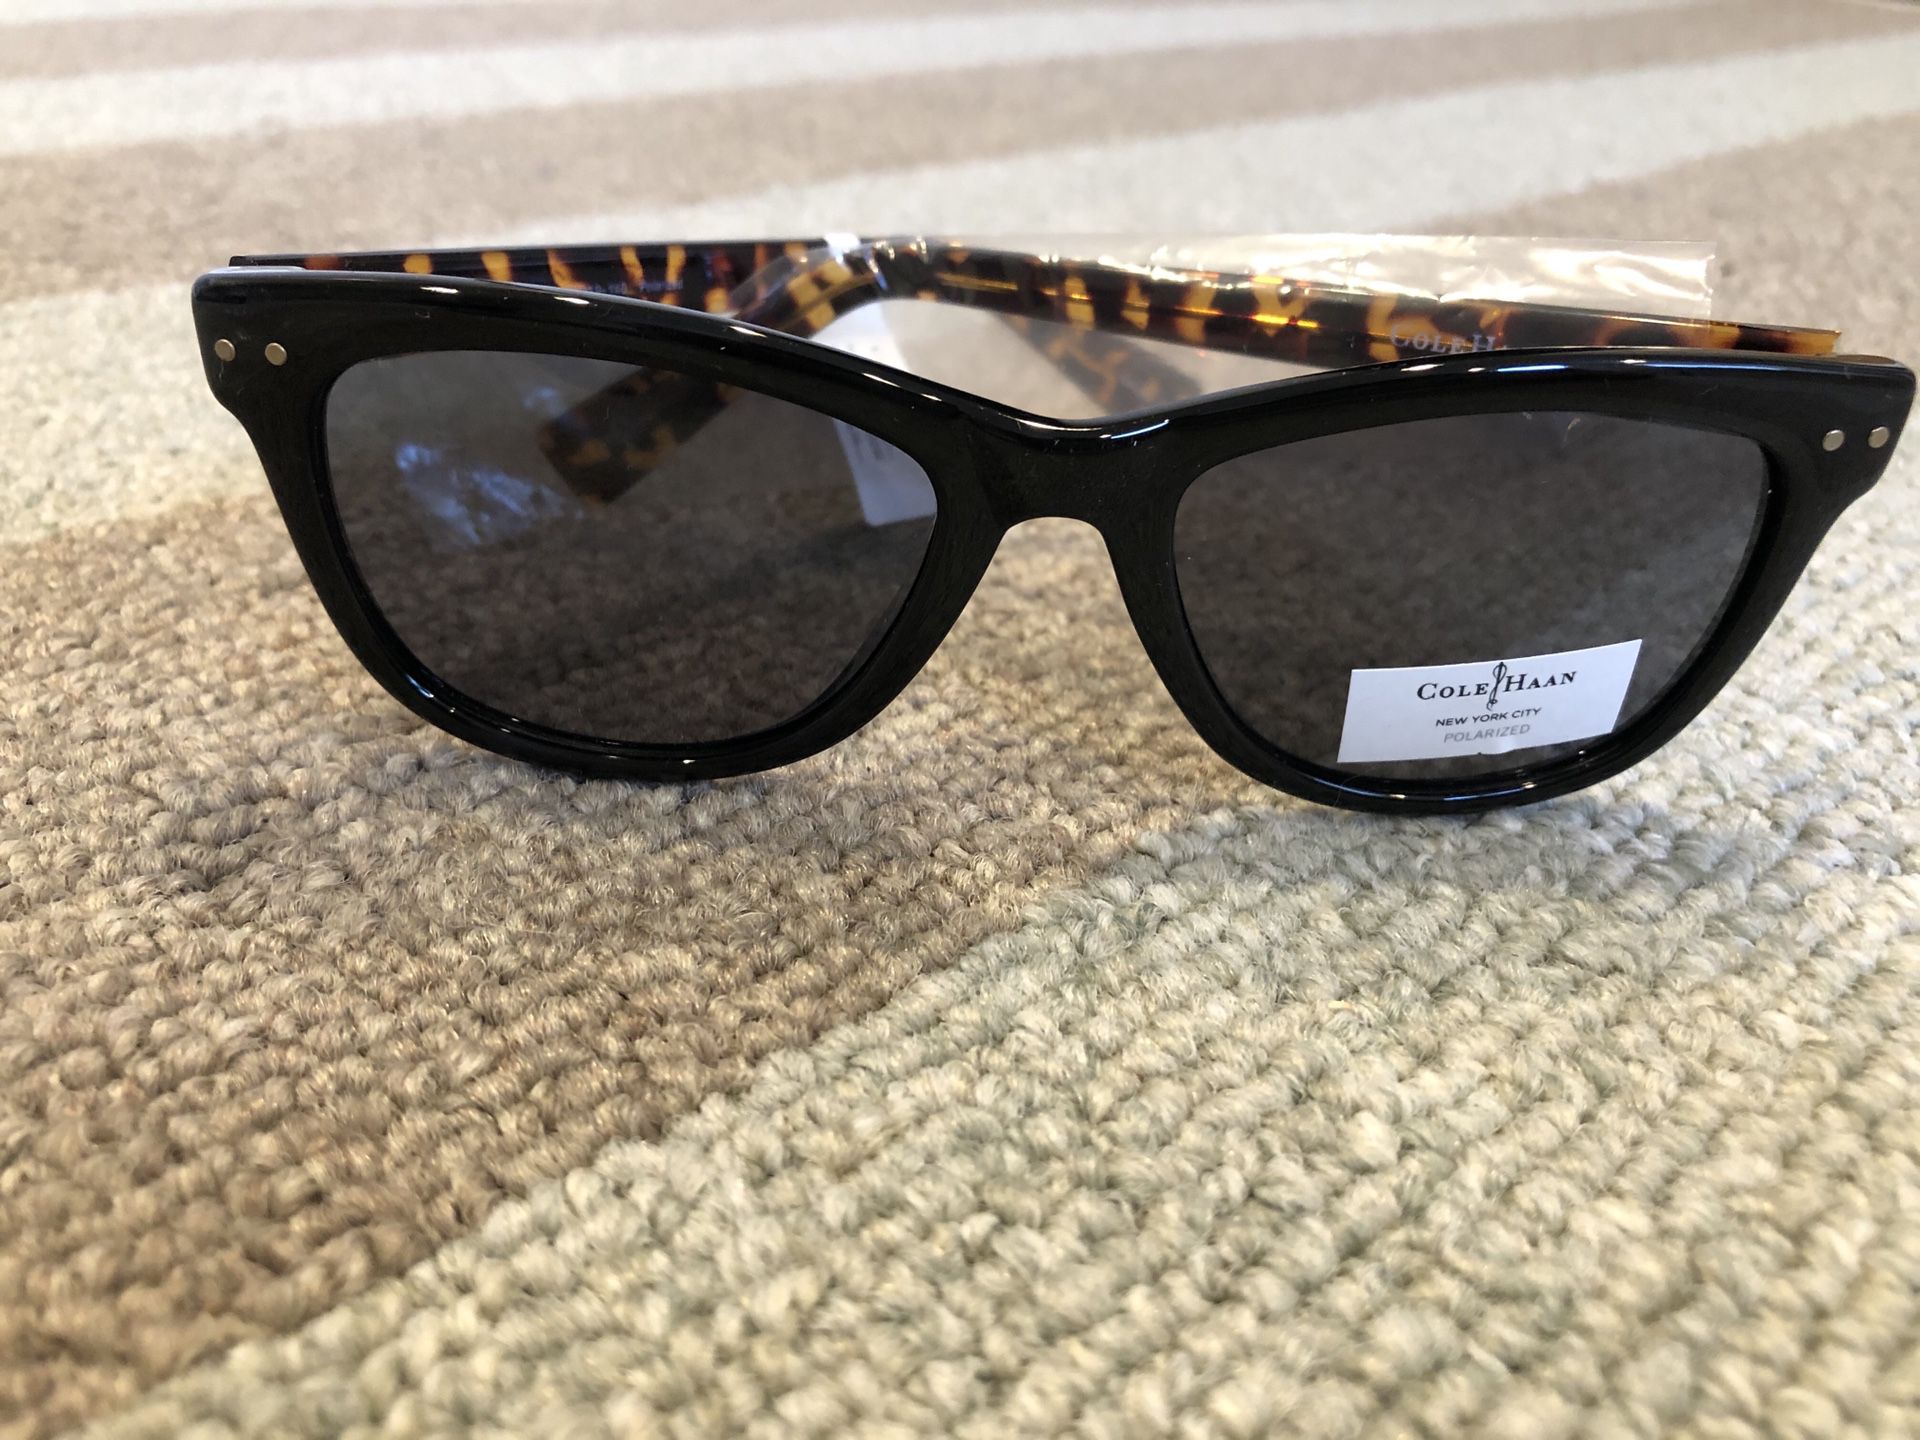 Cole Haan sunglasses